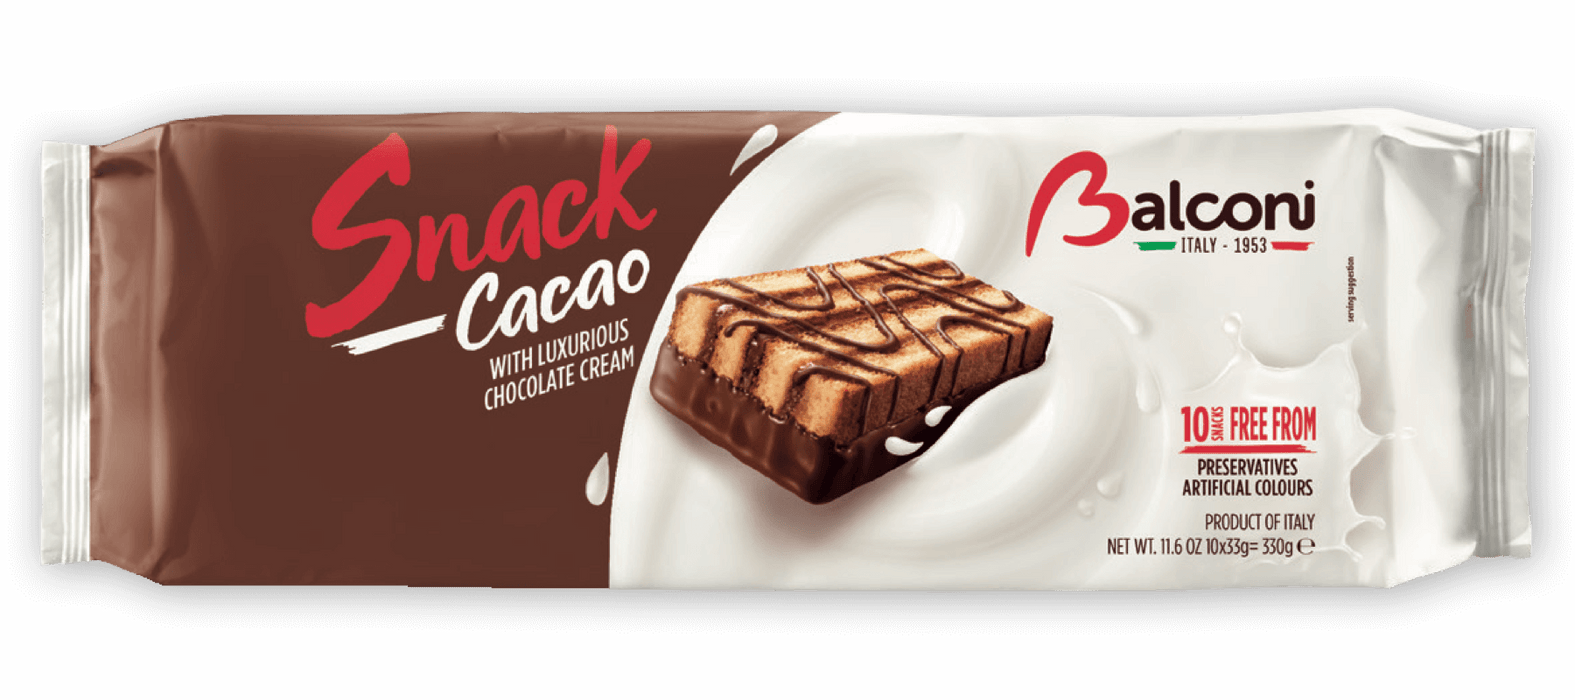 Balconi Snack Cacao, 10x33g, 11.6 oz | 330g